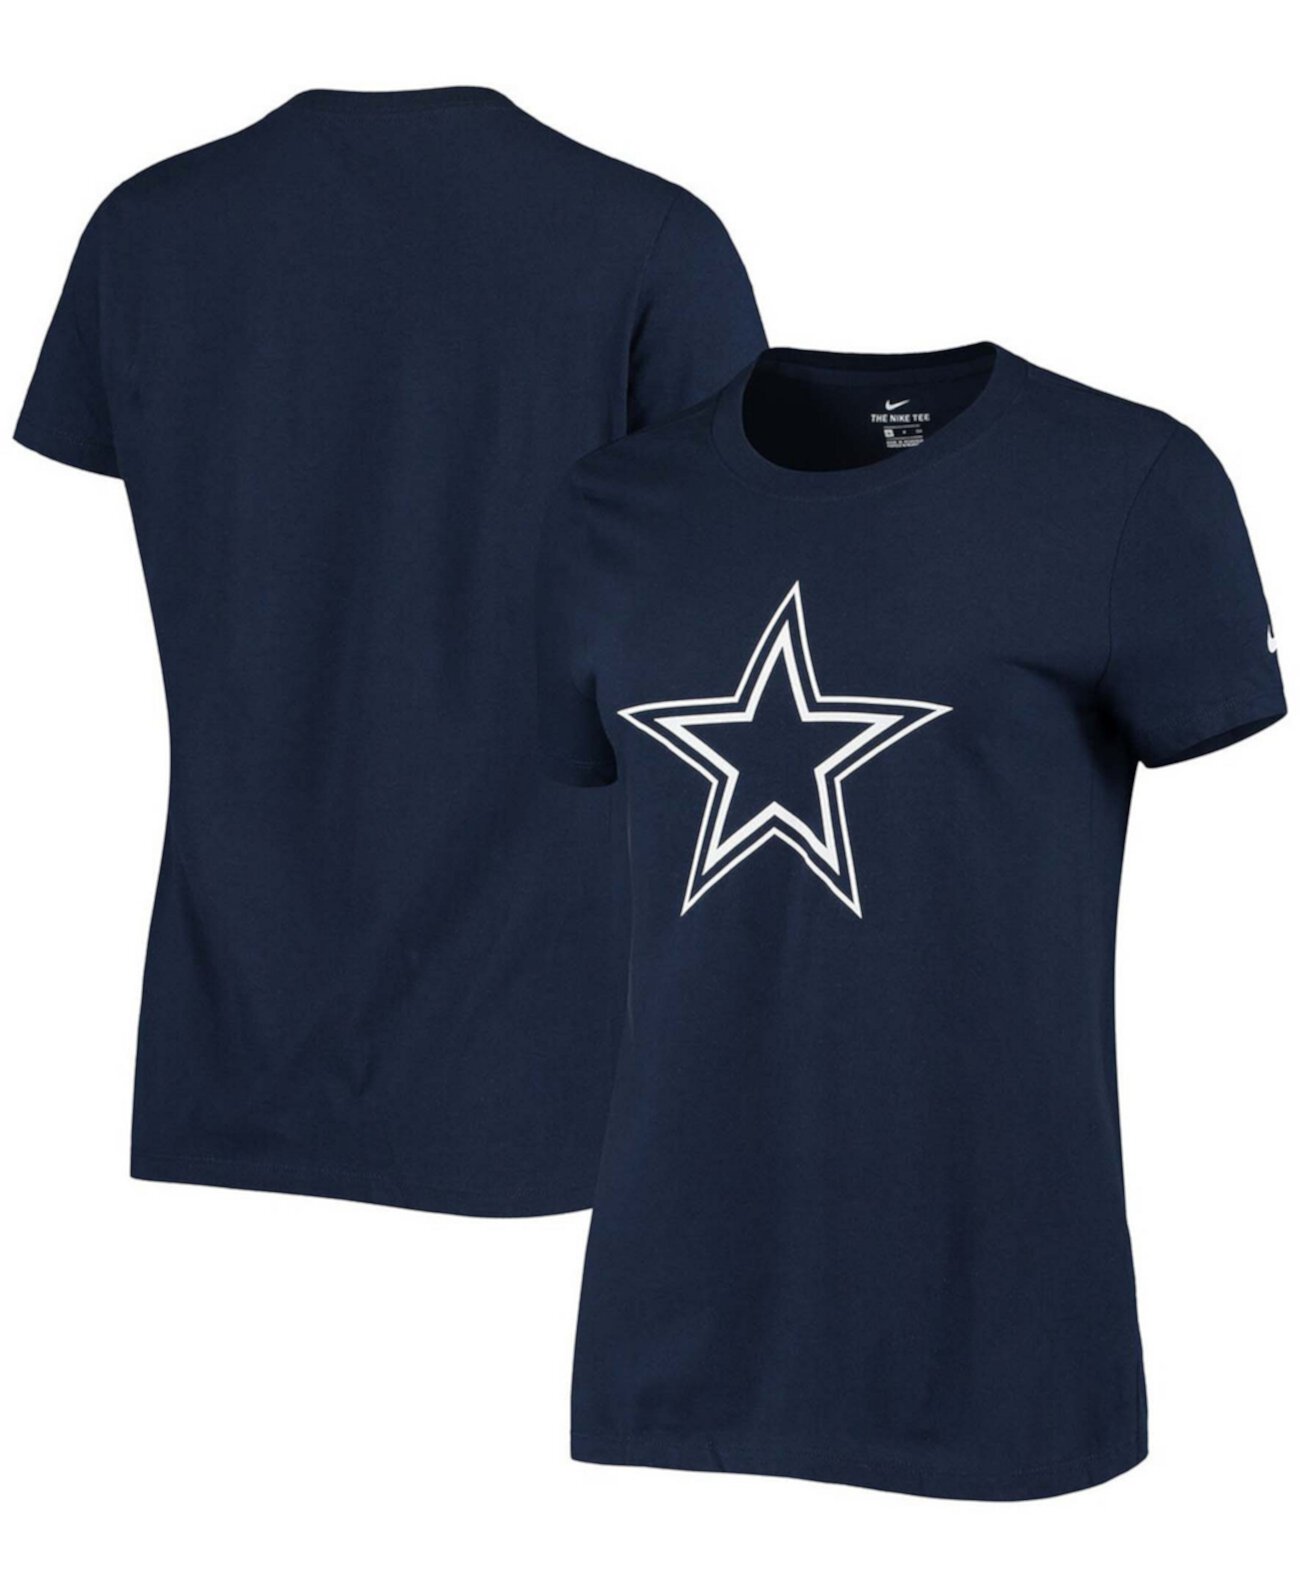 Женская темно-синяя футболка с логотипом Dallas Cowboys Essential Nike